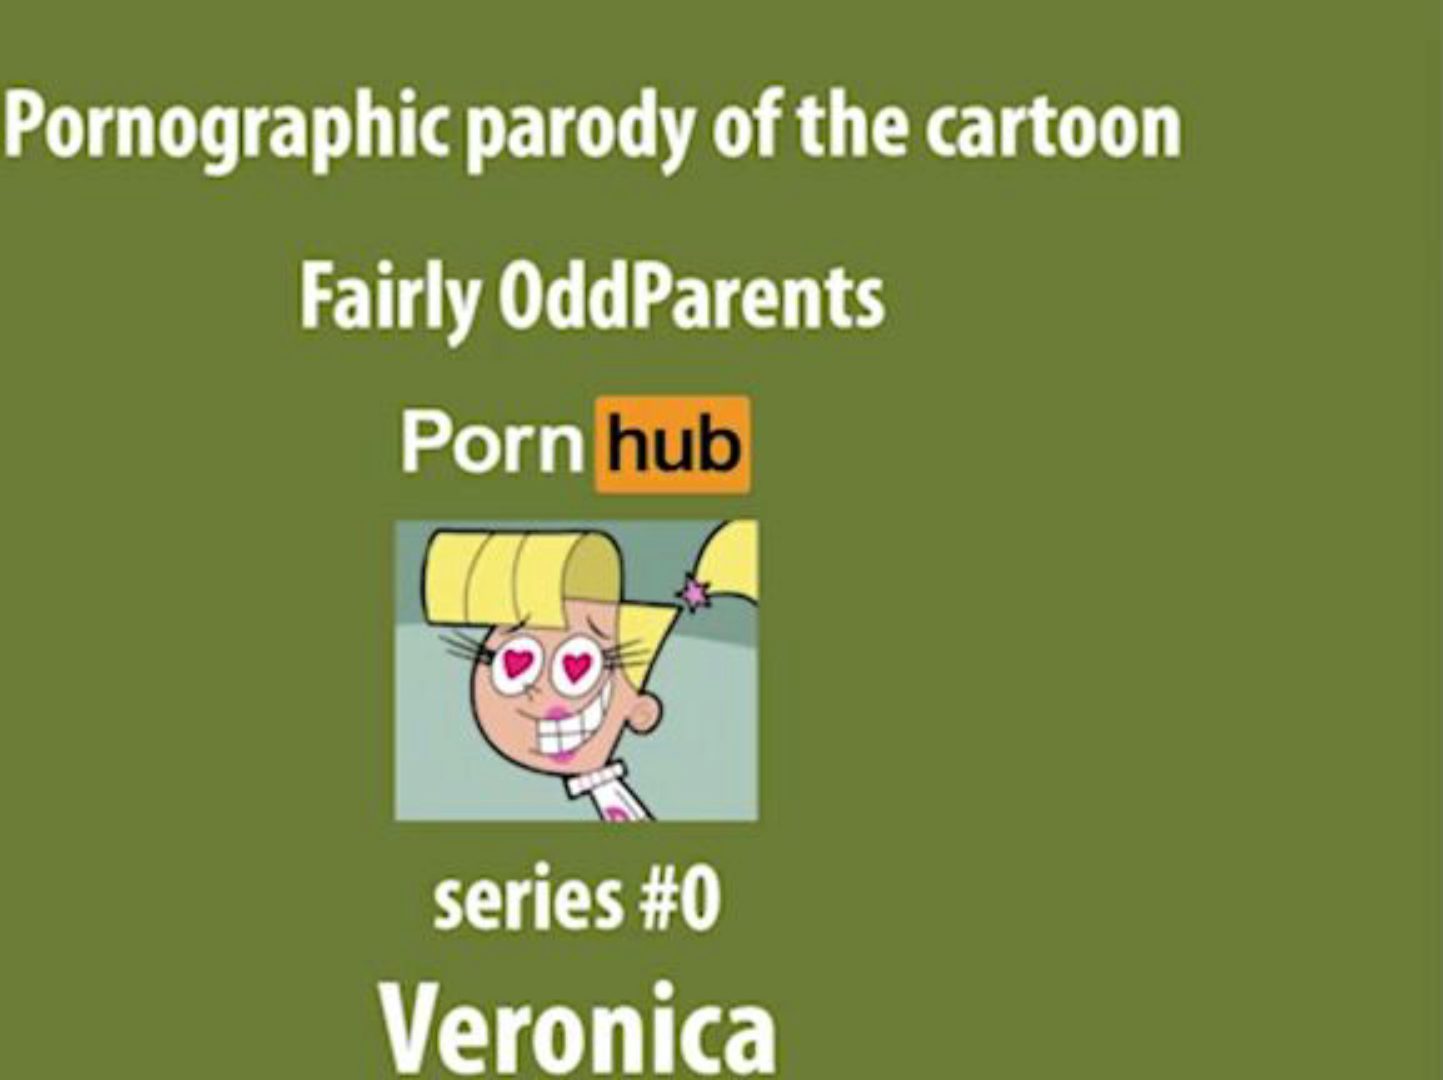 Fairly Oddparents Wanda Fucks Timmy The Cartoon Porn - XVDS TV